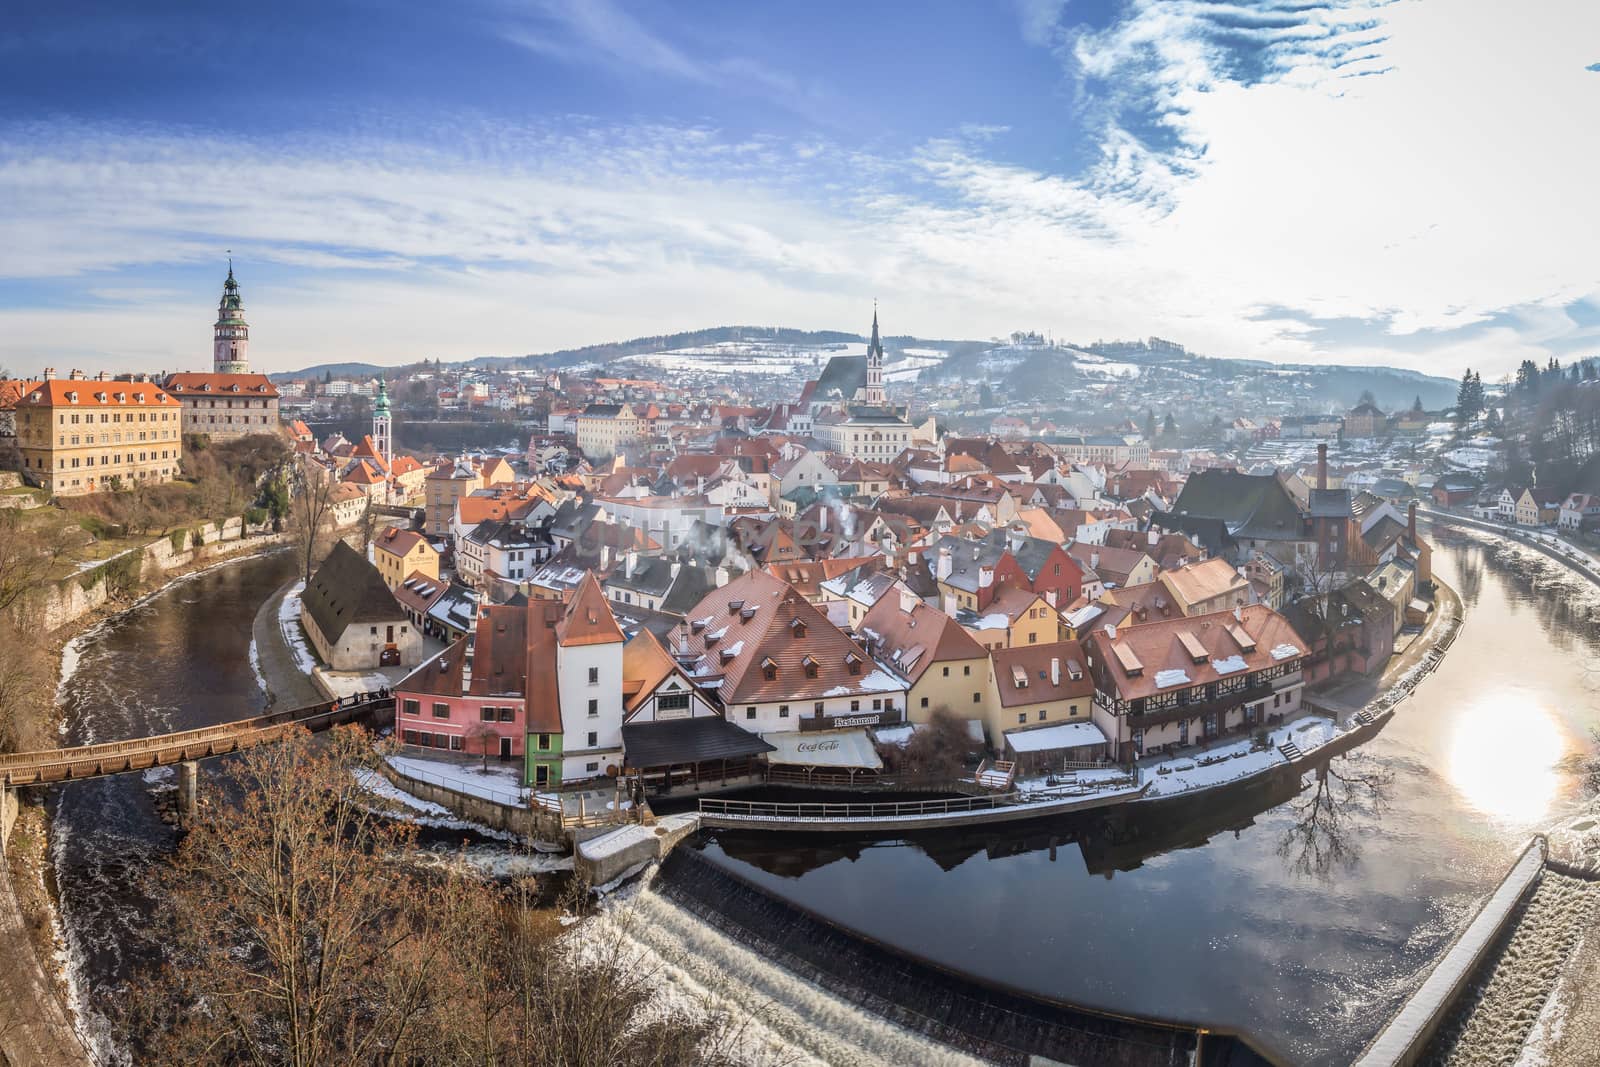 View of castle and houses in Cesky Krumlov in winter, Czech republic by petrsvoboda91